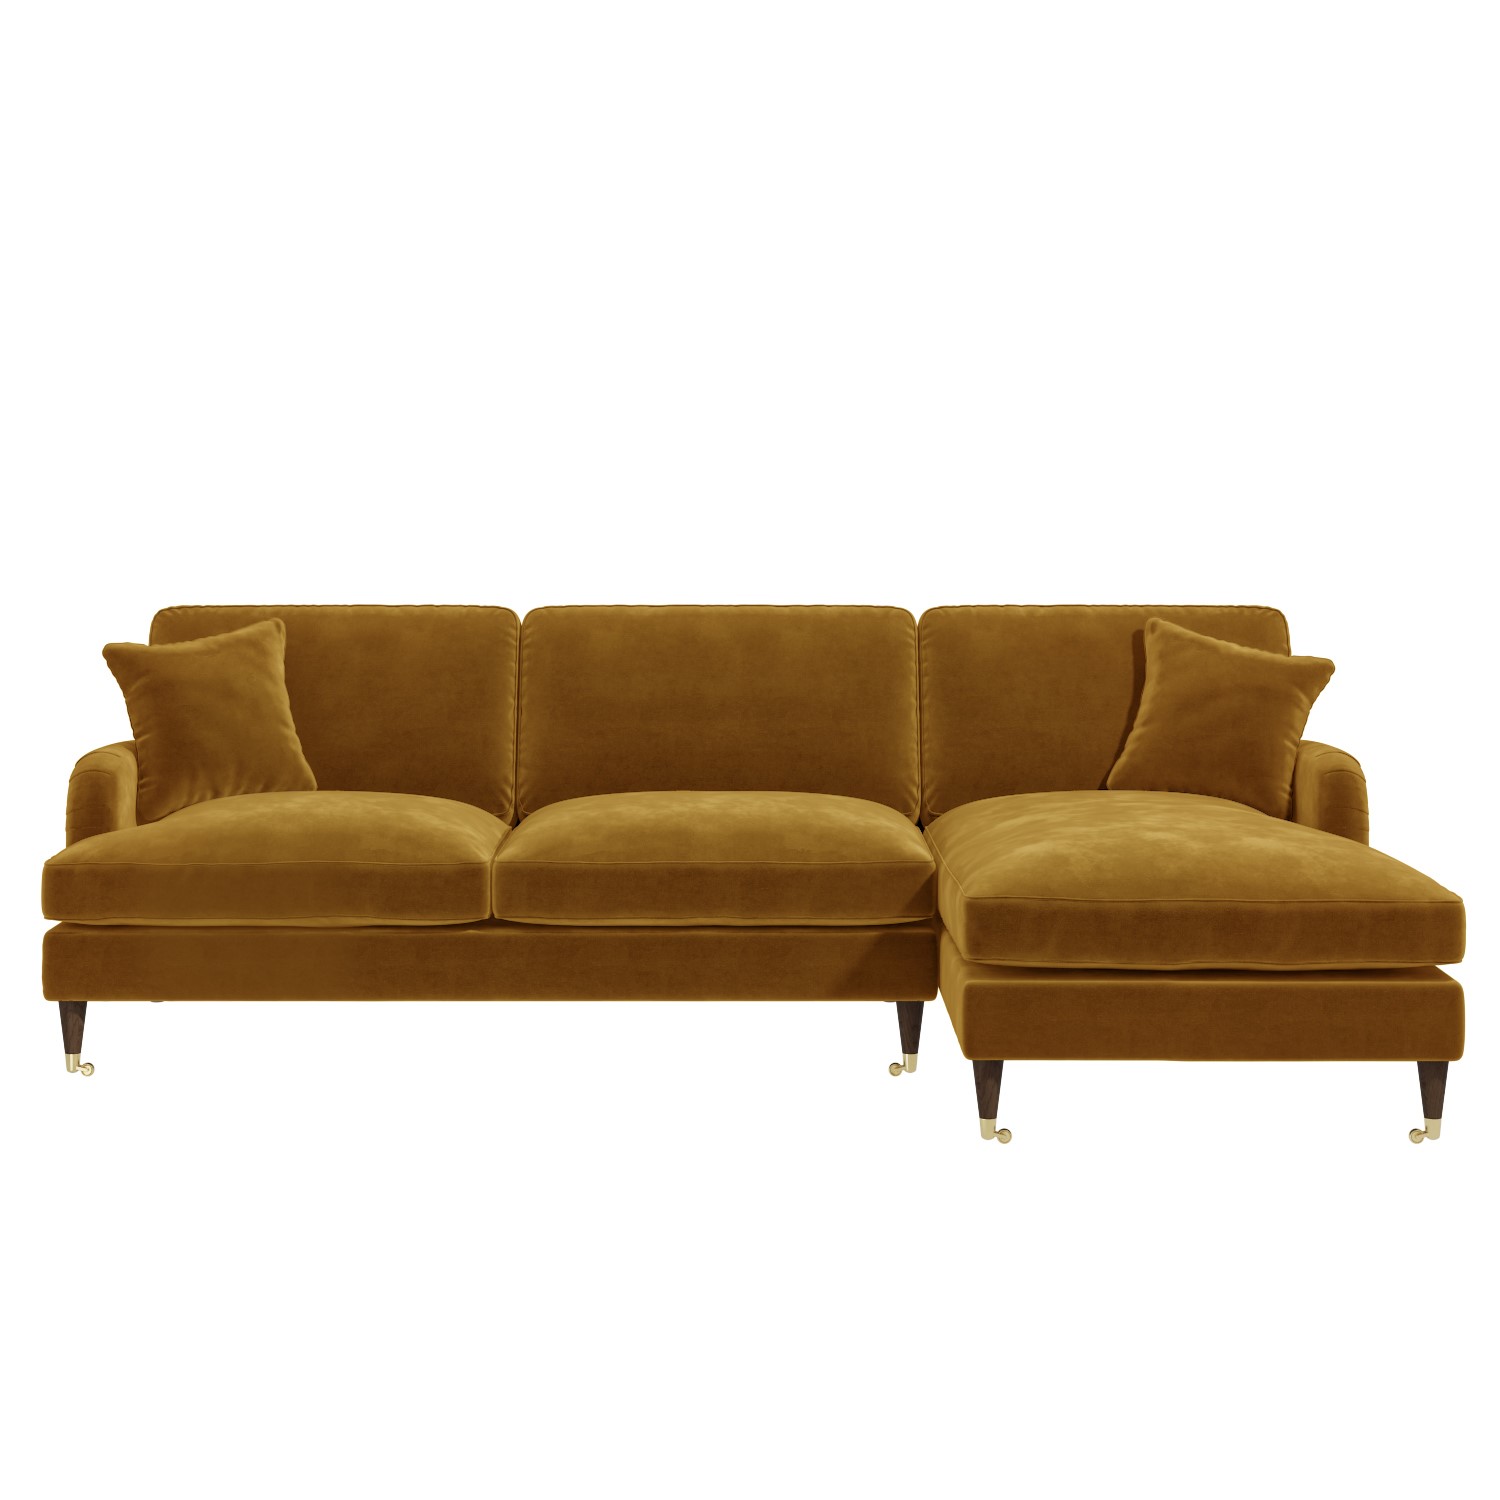 Photo of Mustard velvet right hand facing l shaped sofa - seats 4 - payton